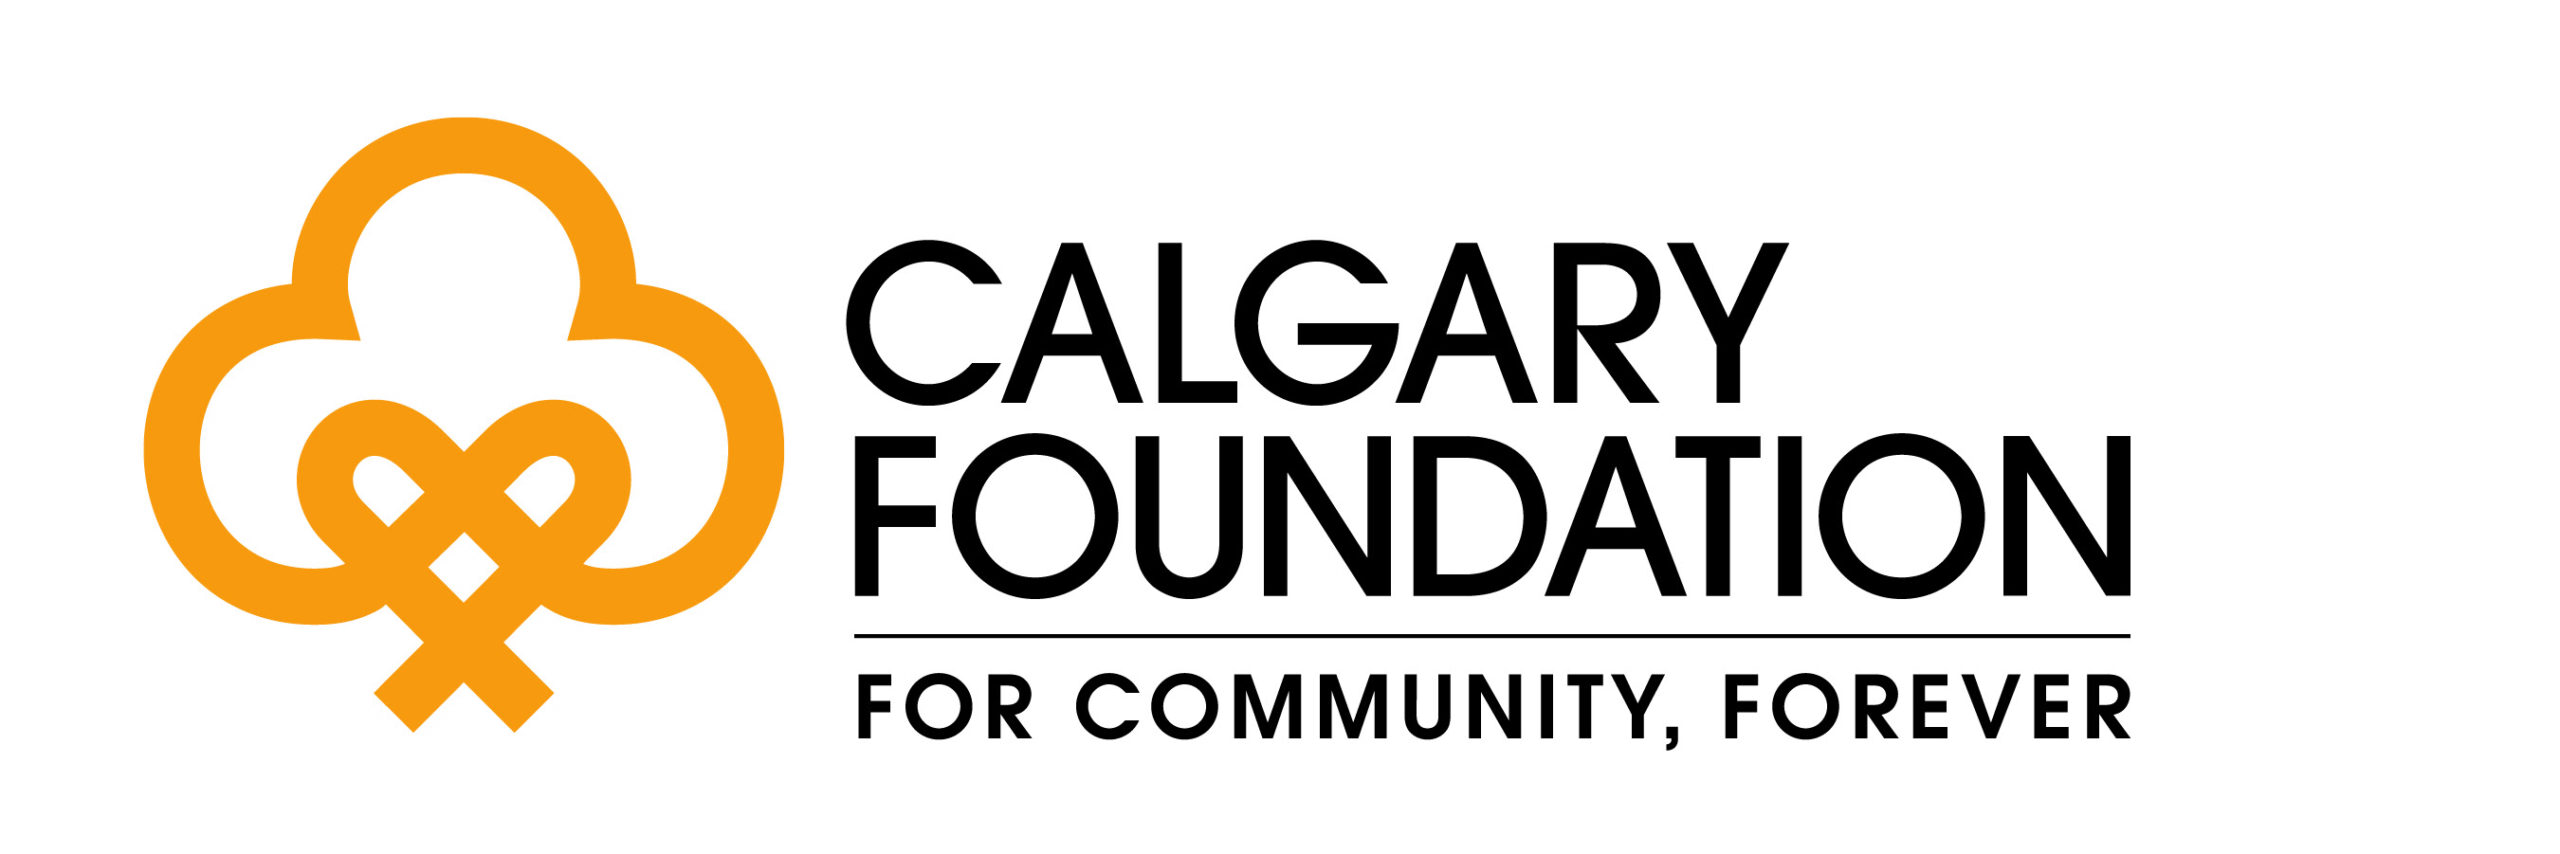 Calgary-Foundation-logo.jpg